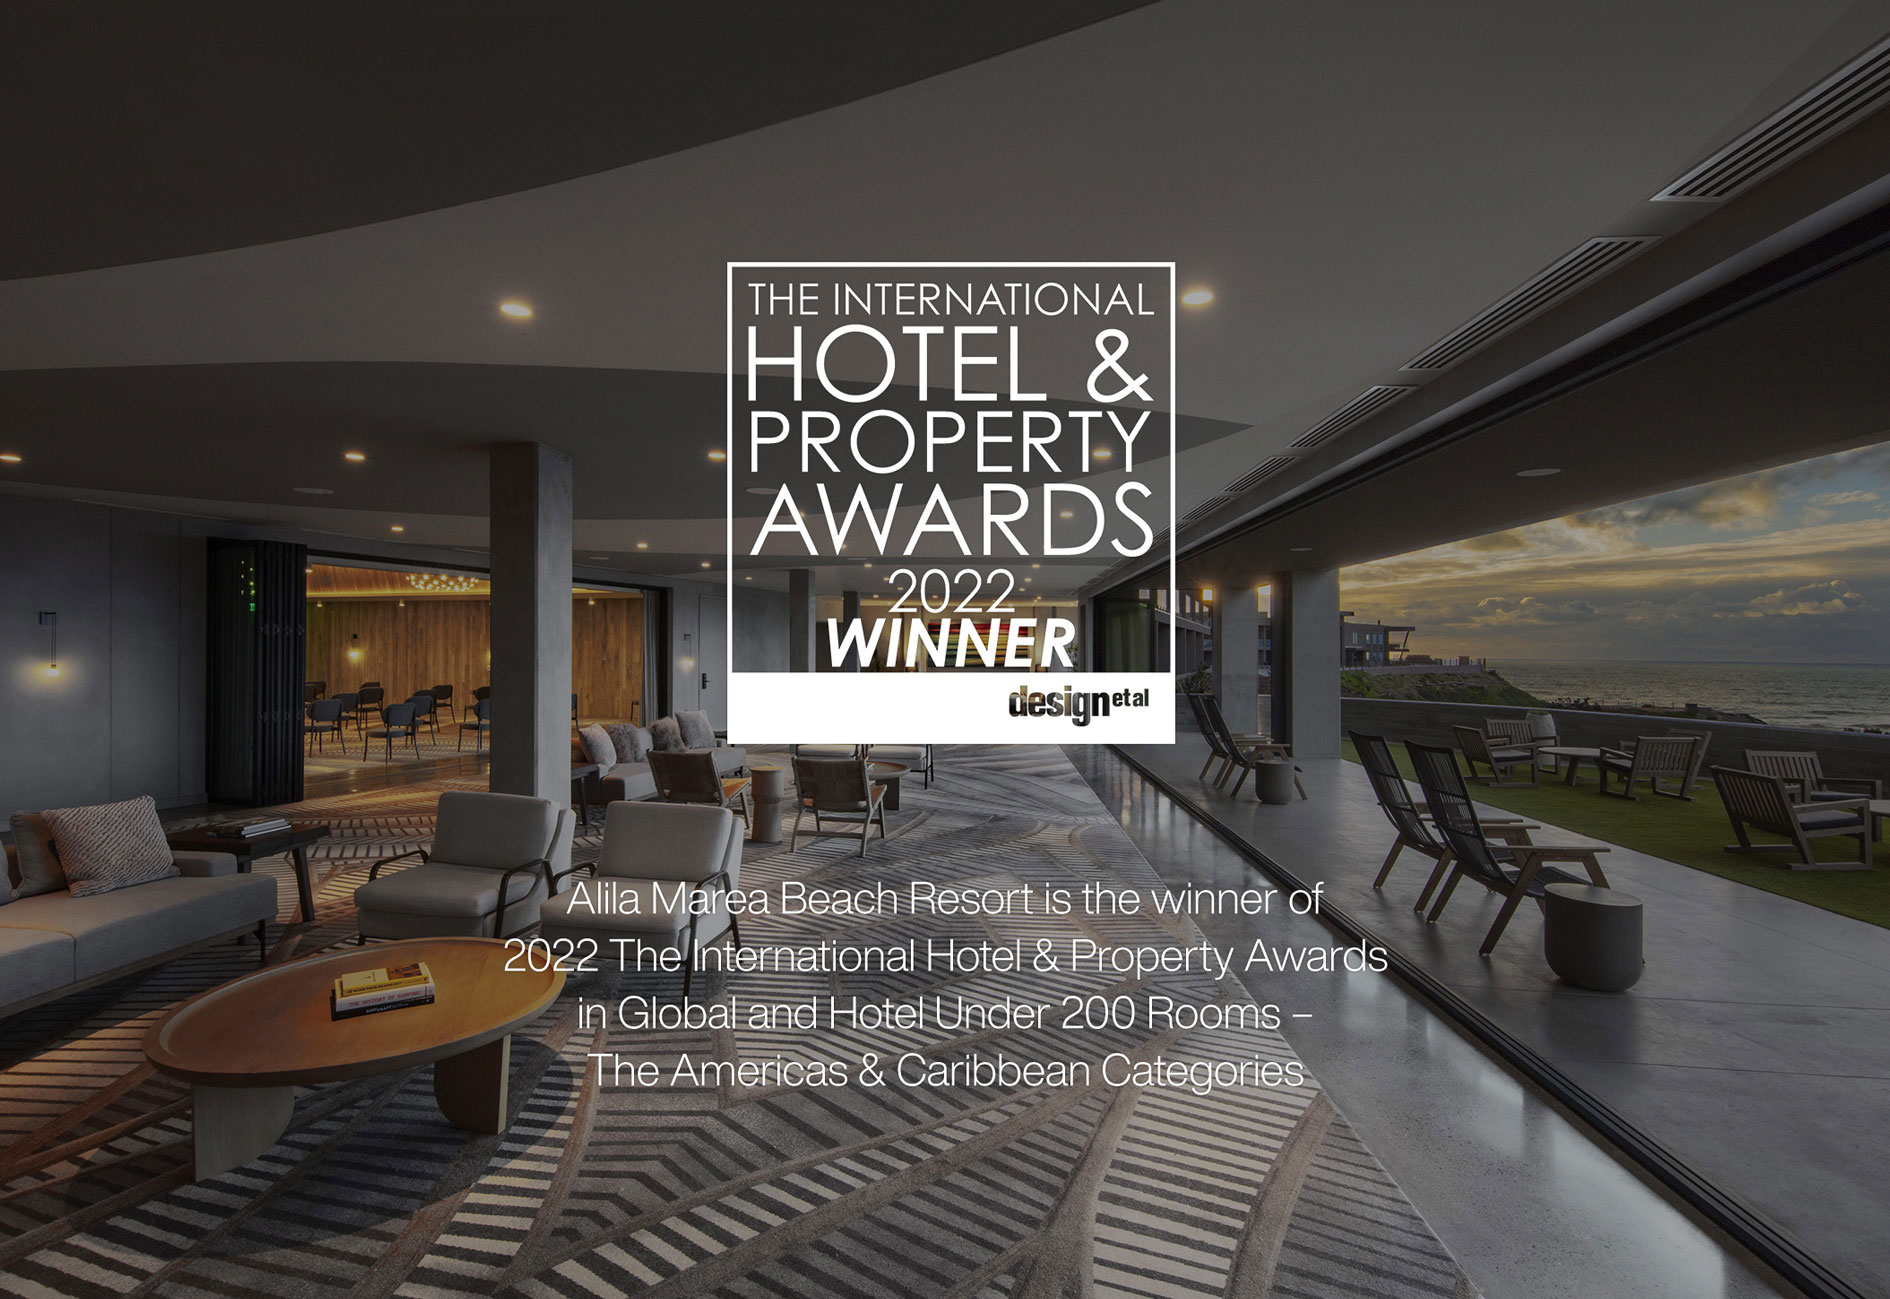 The International Hotel & Property Awards – Alila Marea designed by Mark Zeff